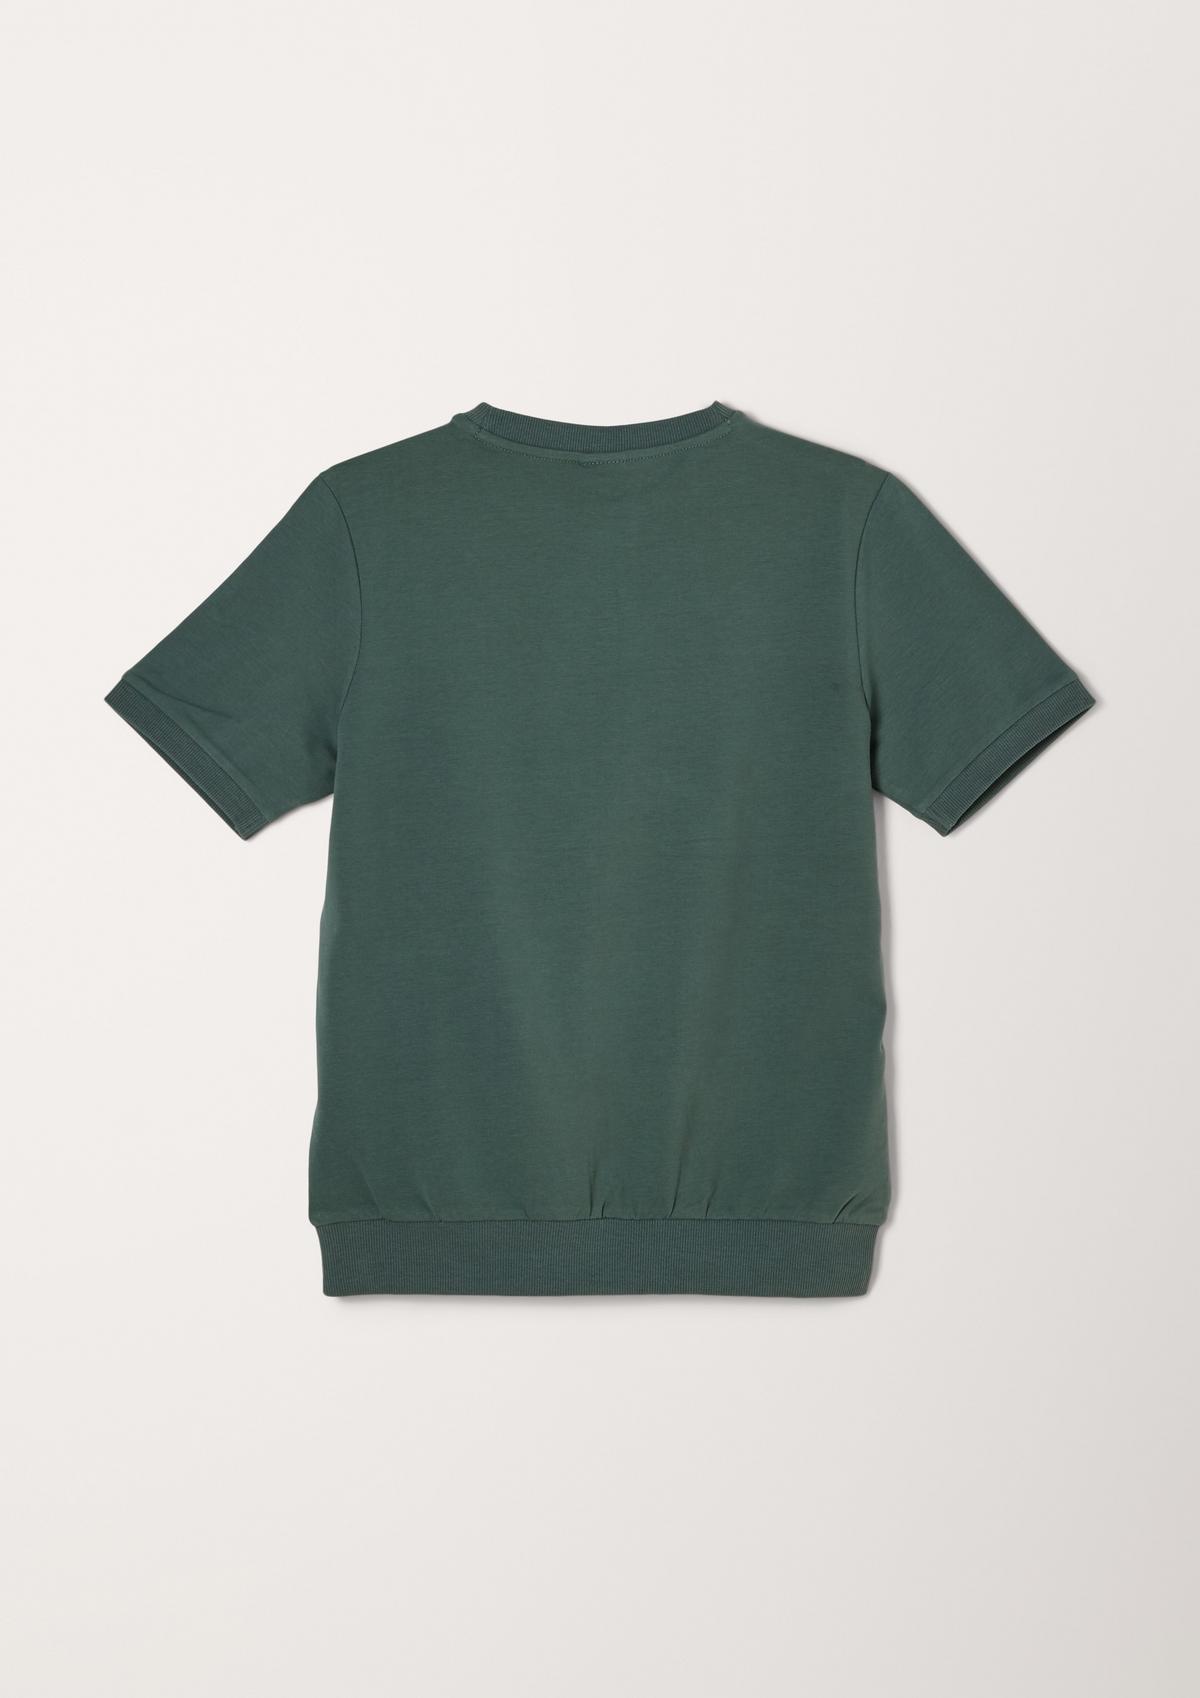 s.Oliver T-shirt made of lightweight sweatshirt fabric